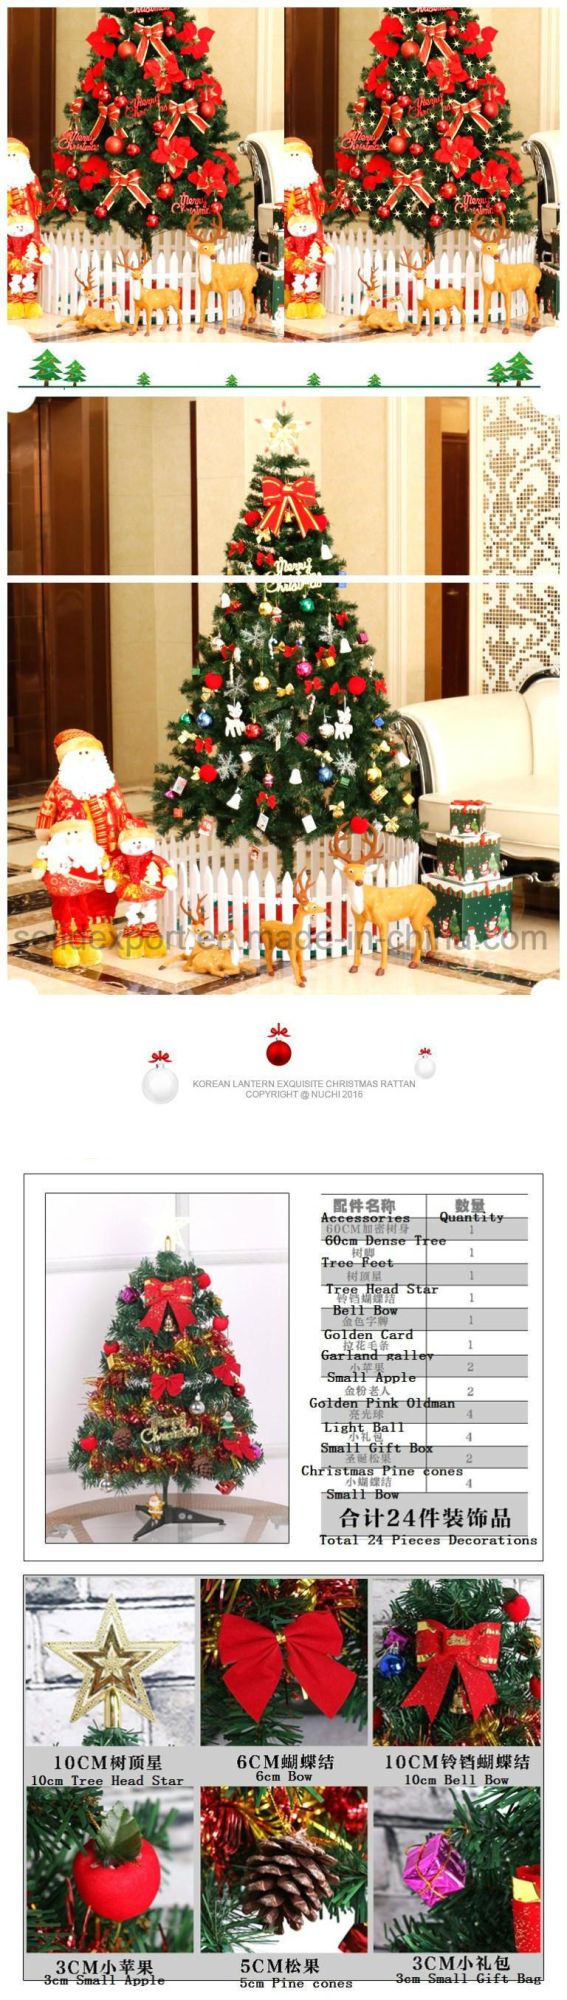 Shopping Mall Home Using Santa Claus Deer Christmas Tree Decoration